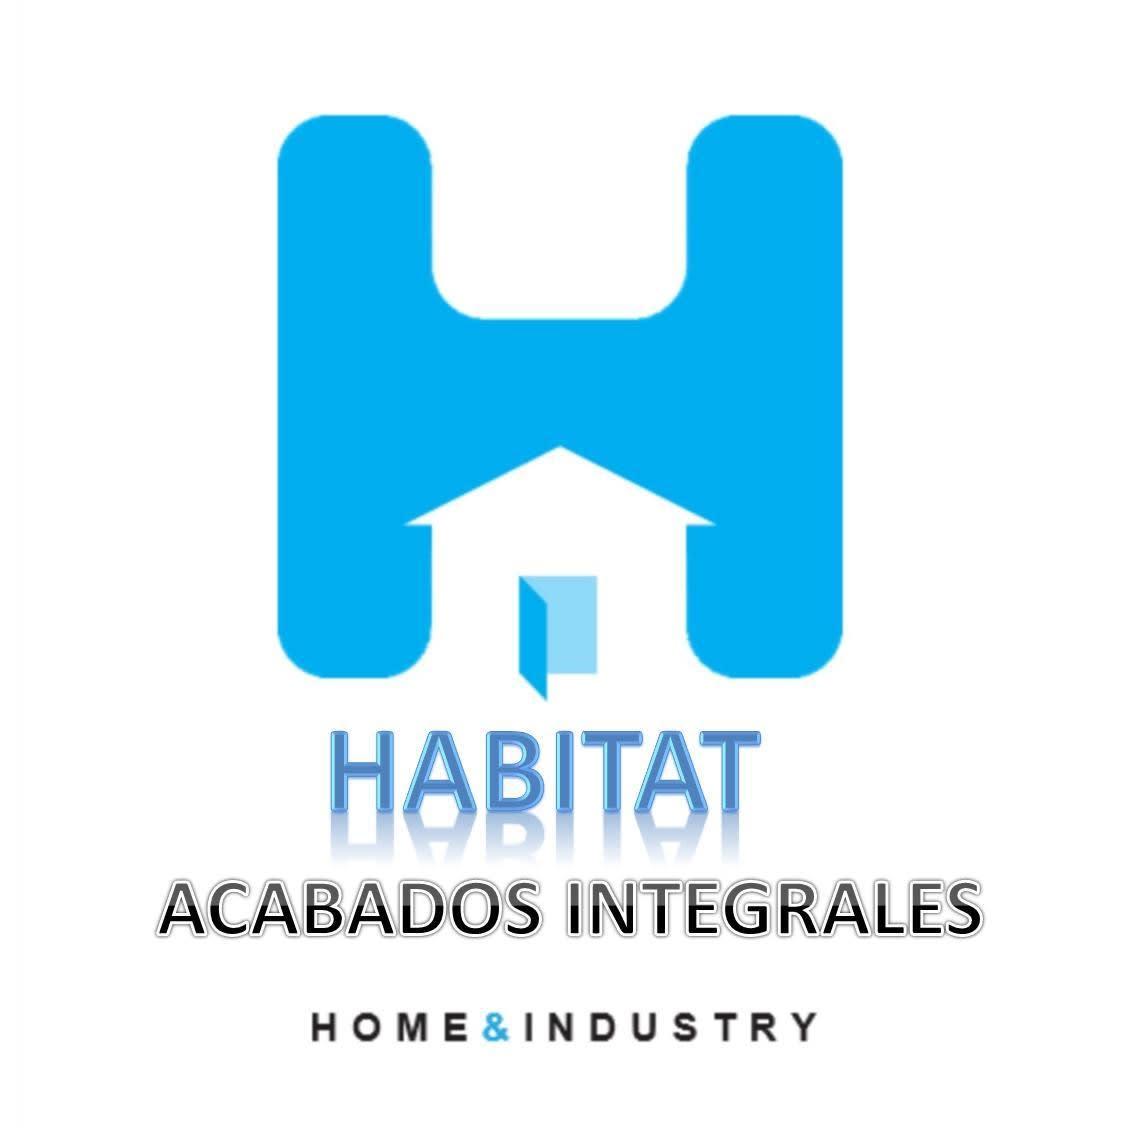 Habitat Acabados Integrales